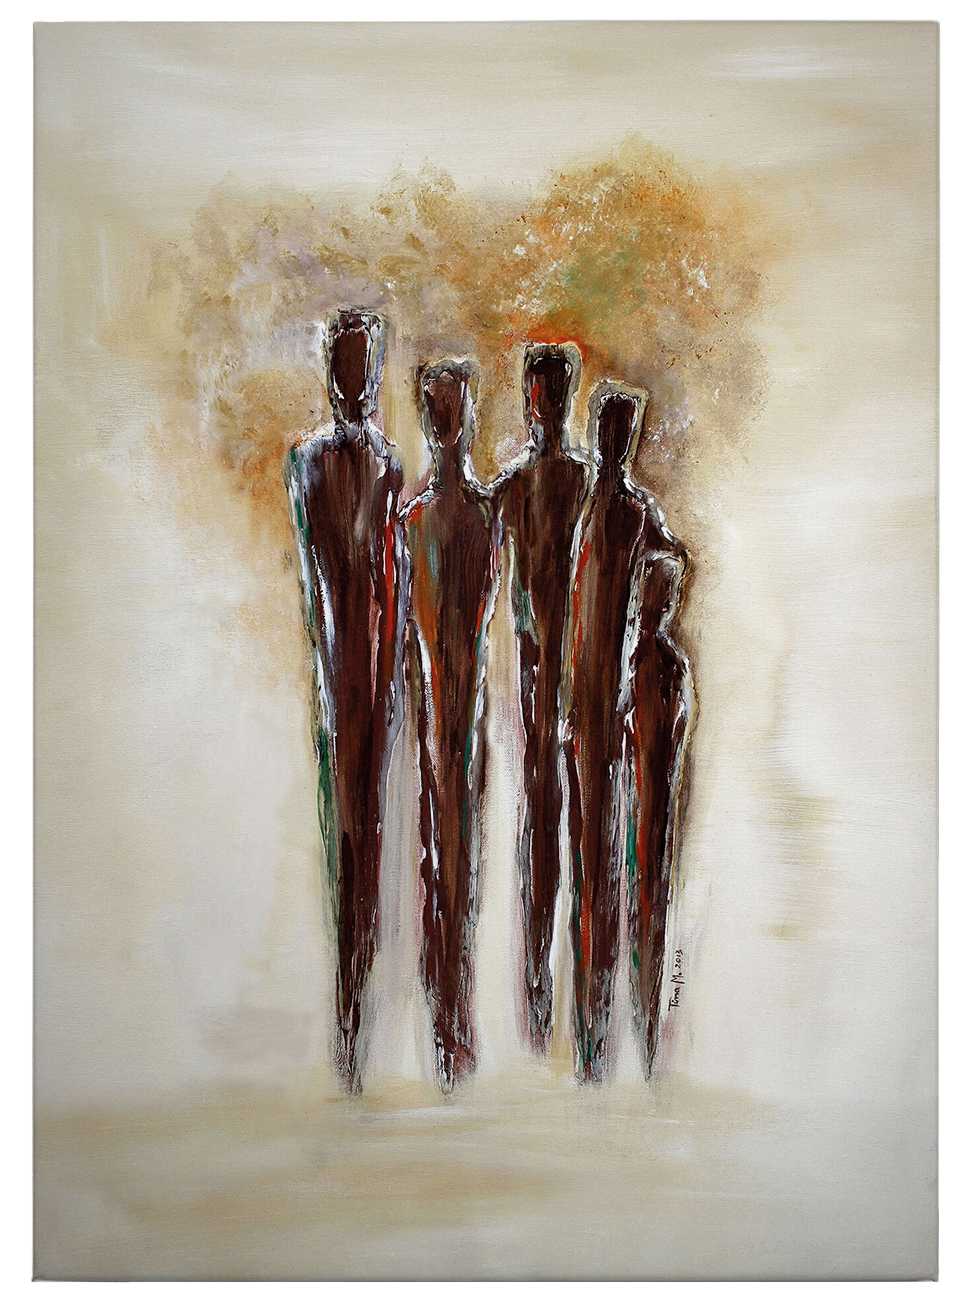             Leinwandbild Kunst Tina Melz "Together 02", Hochformat – 0,50 m x 0,70 m
        